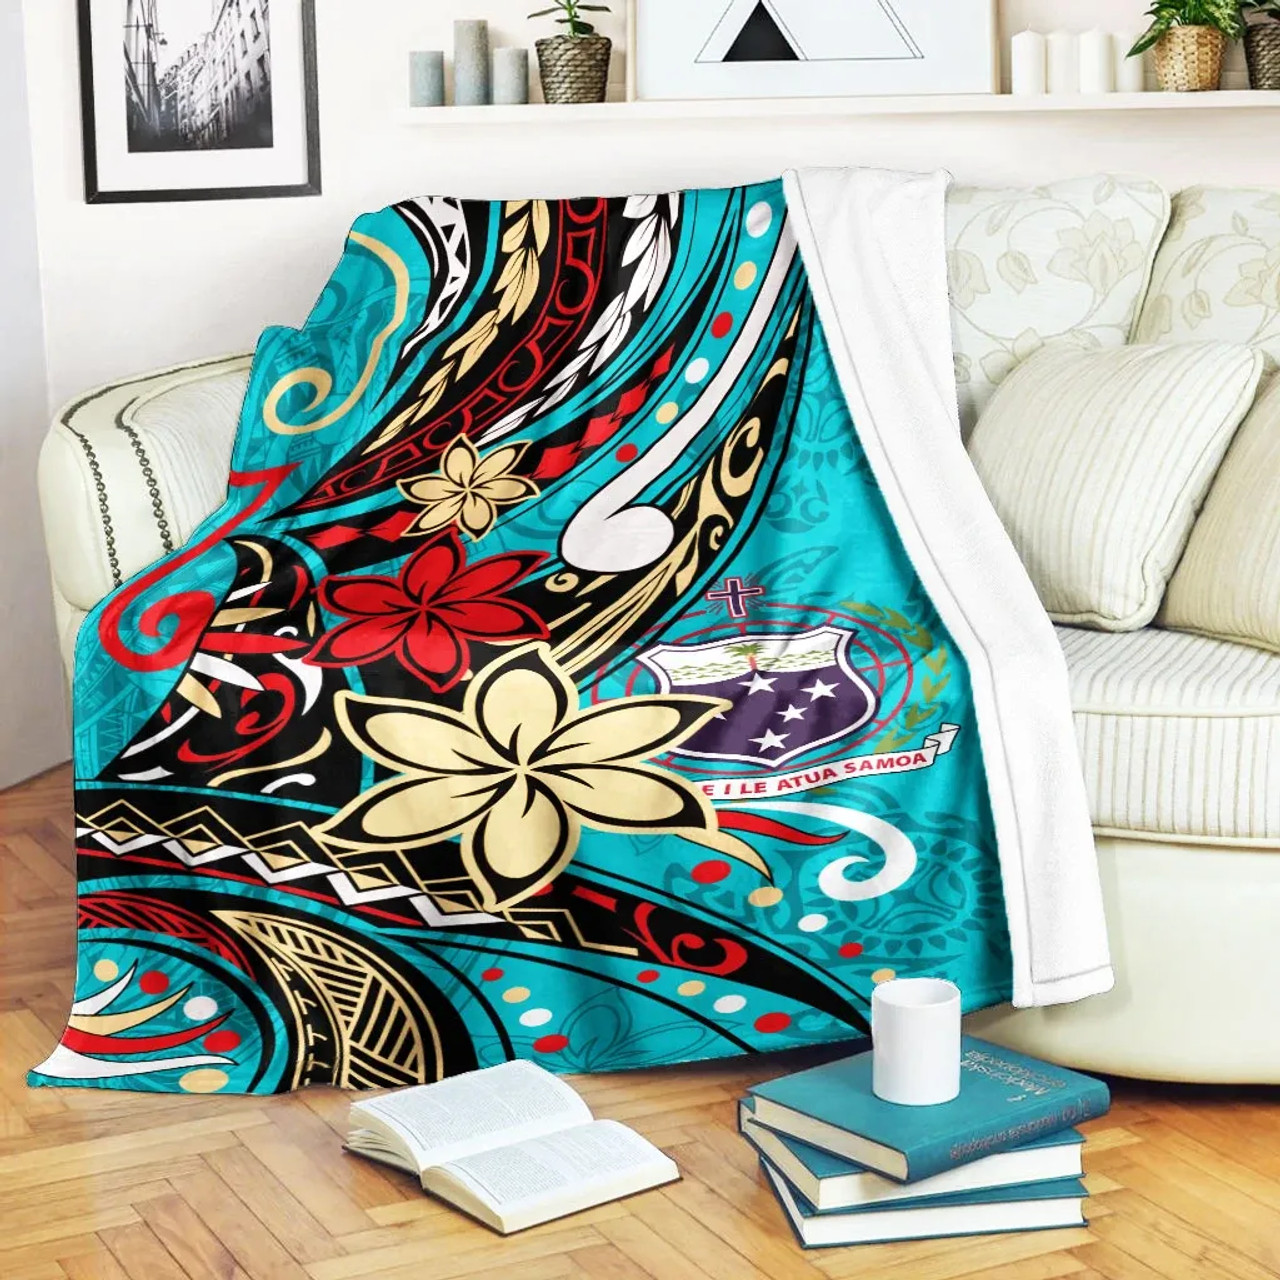 Samoa Premium Blanket - Tribal Flower With Special Turtles Blue Color 1